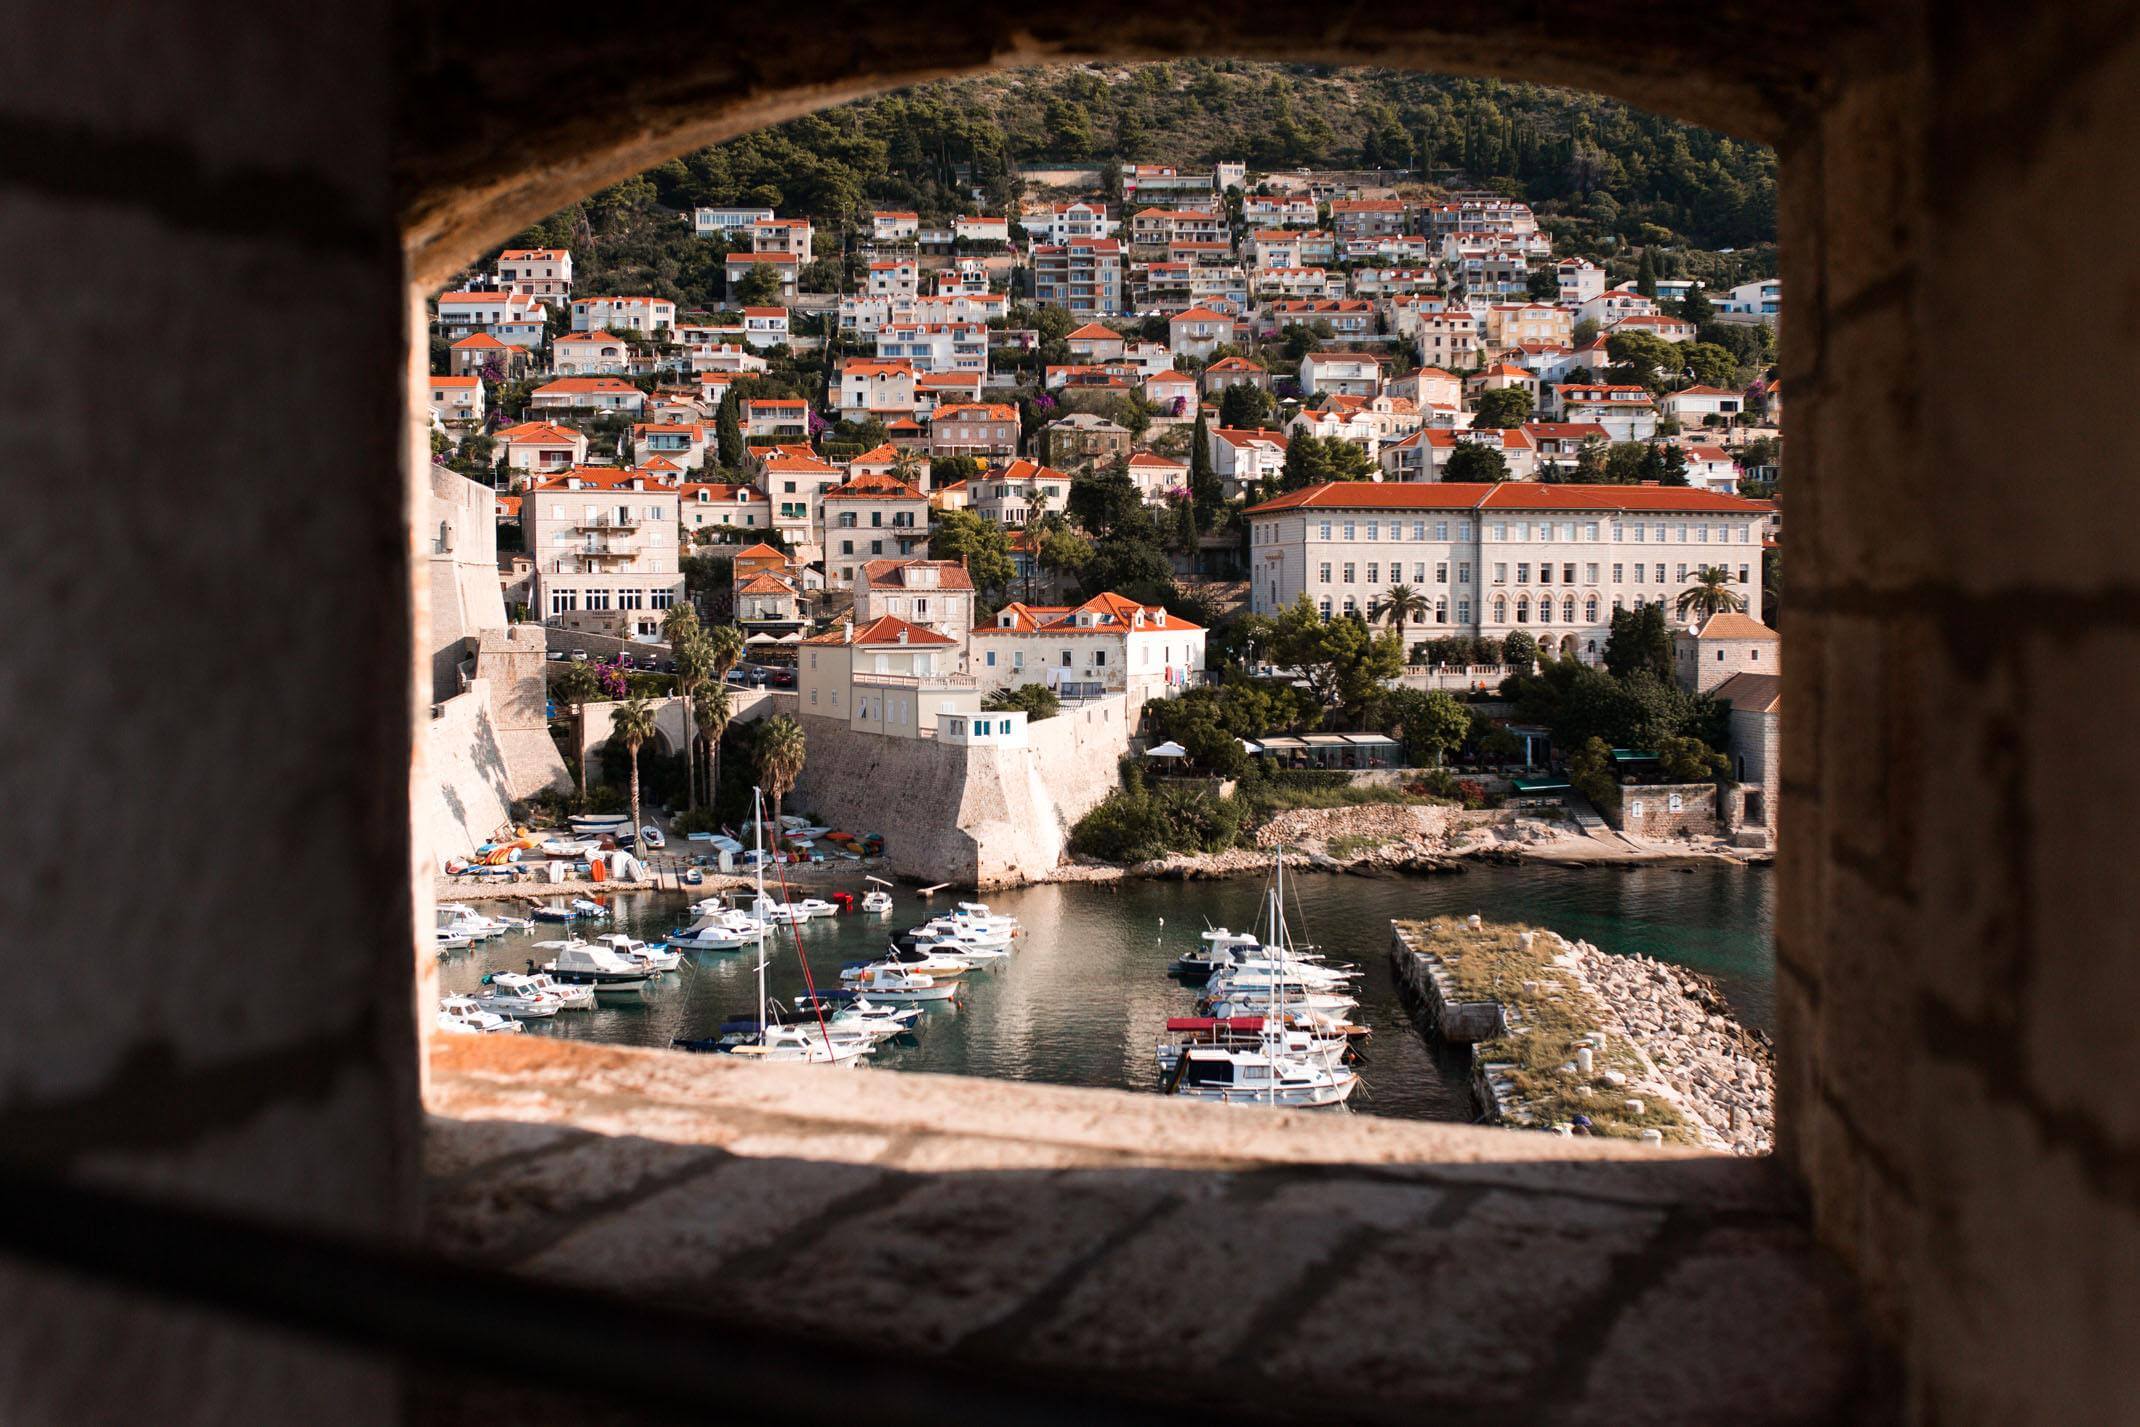 A guide to exploring Dubrovnik, Croatia